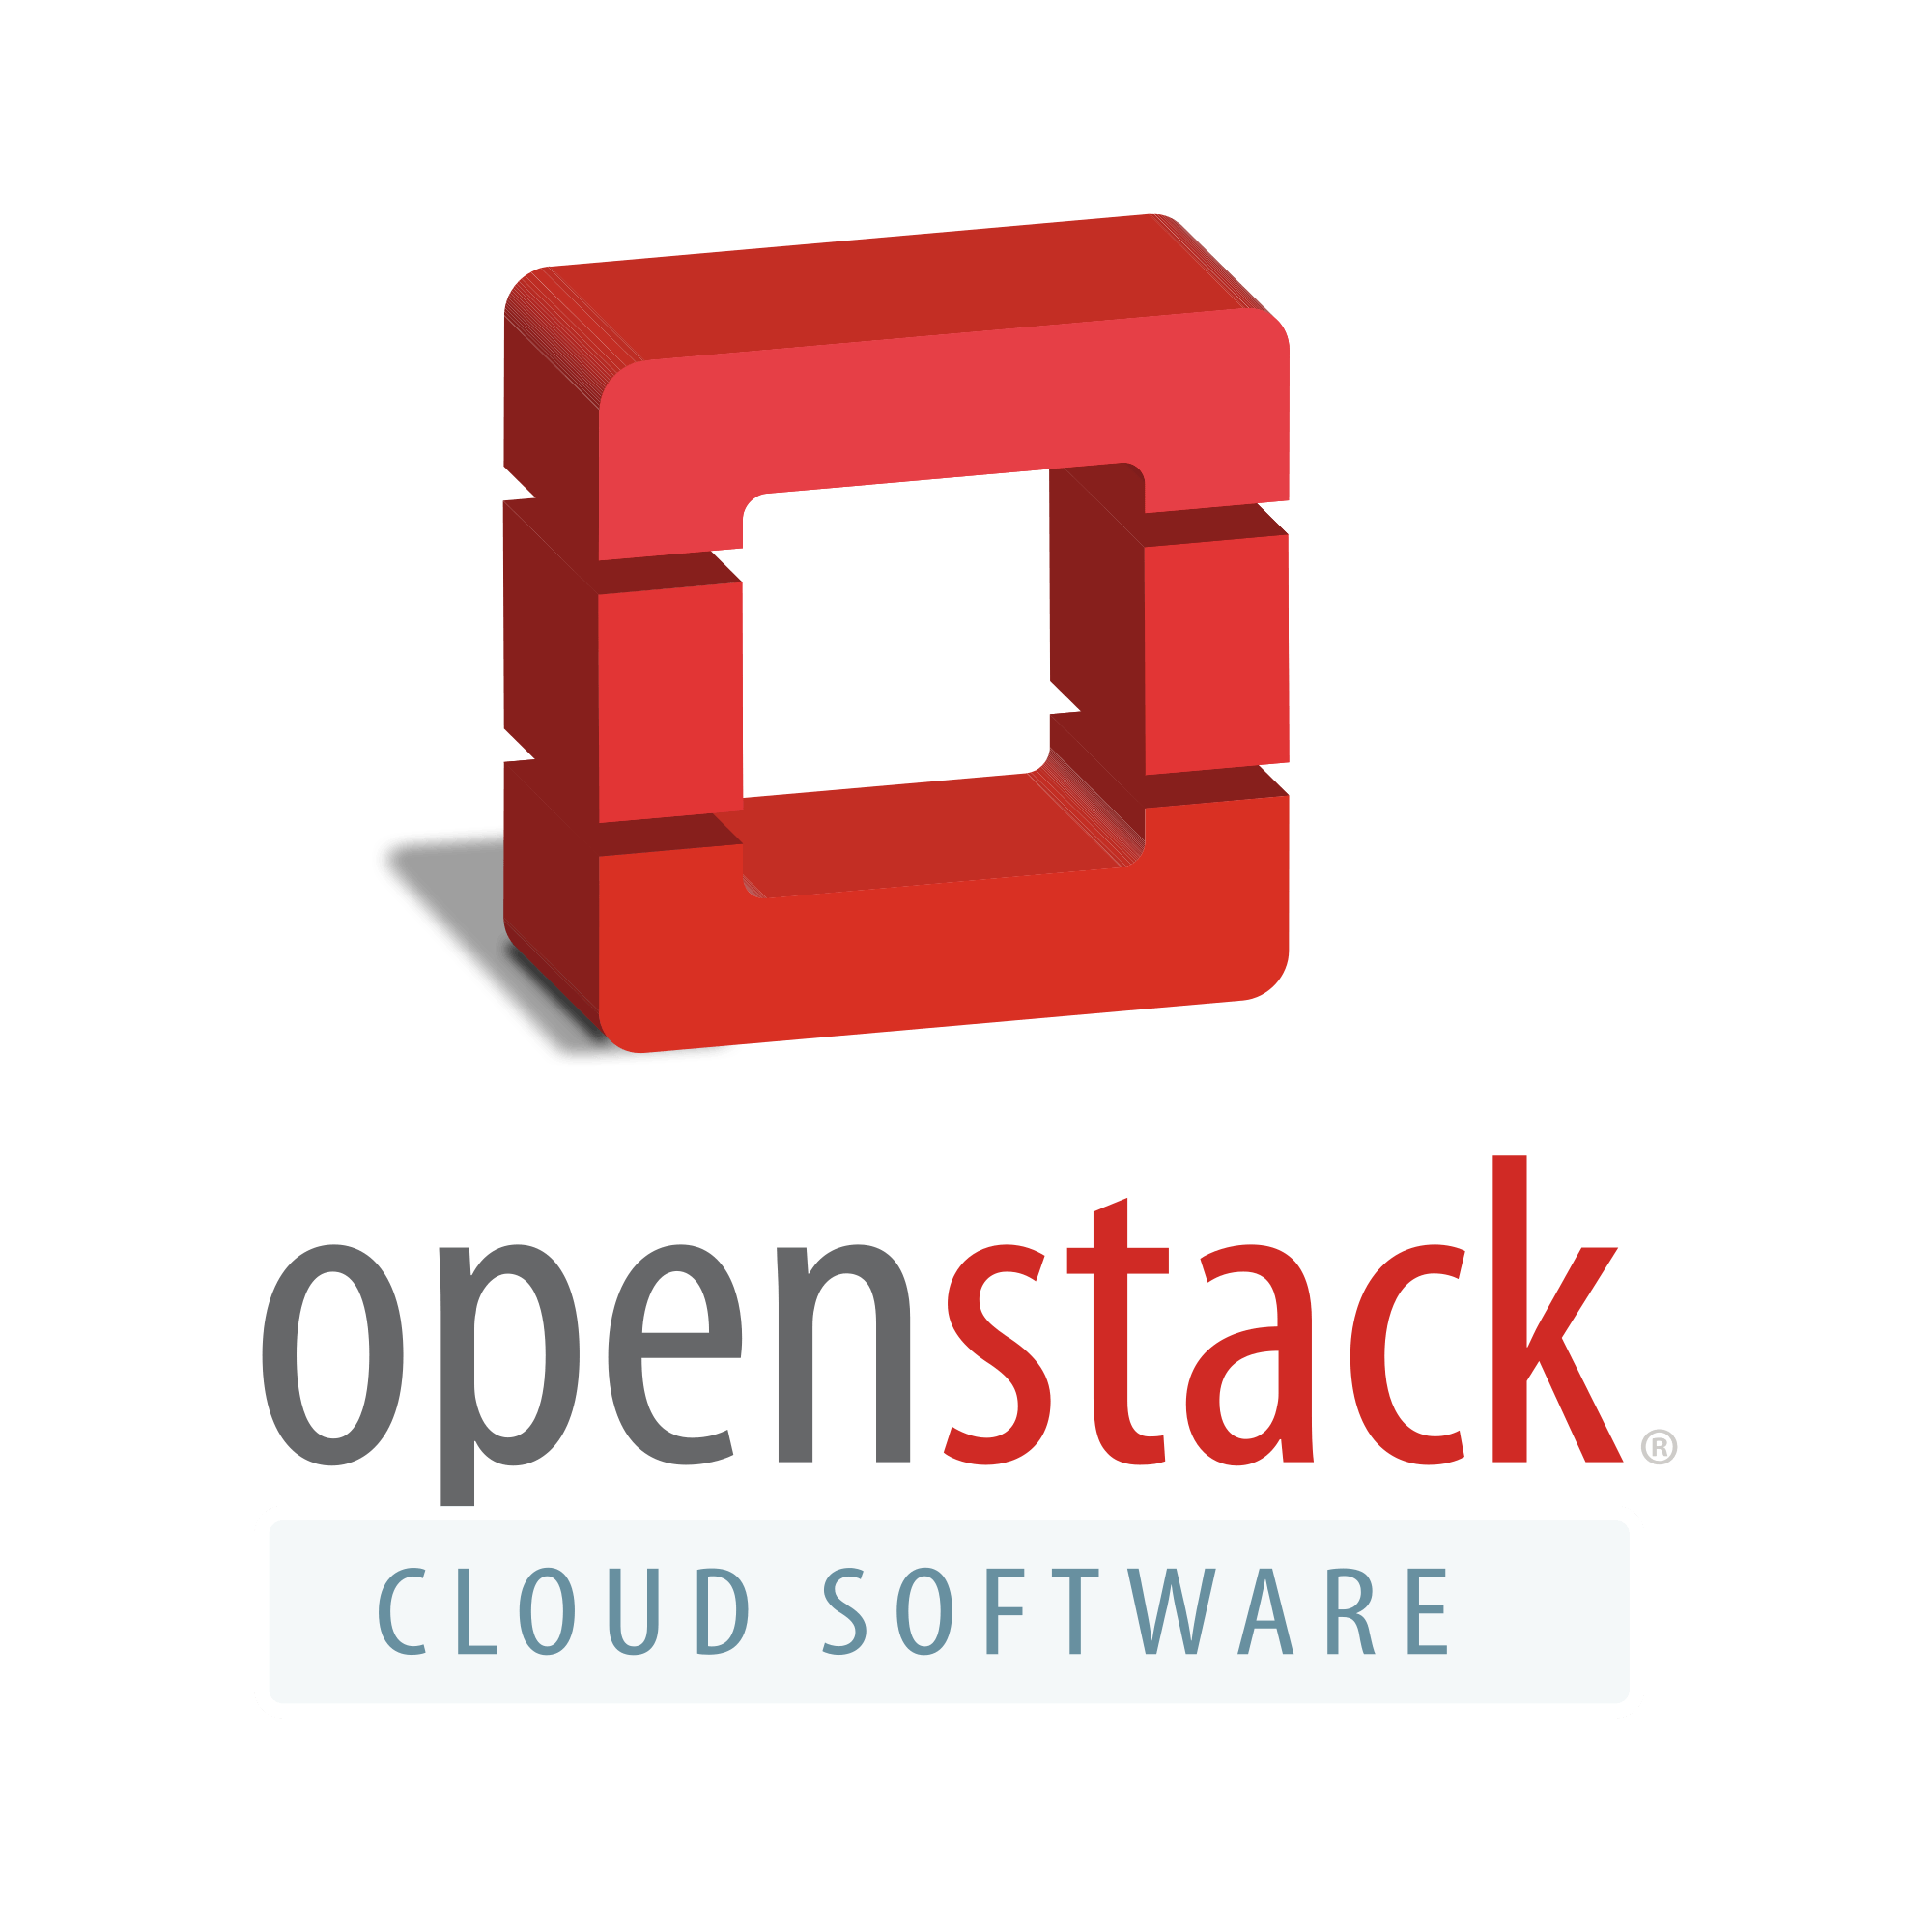 OpenStack Logo - The OpenStack logo.svg